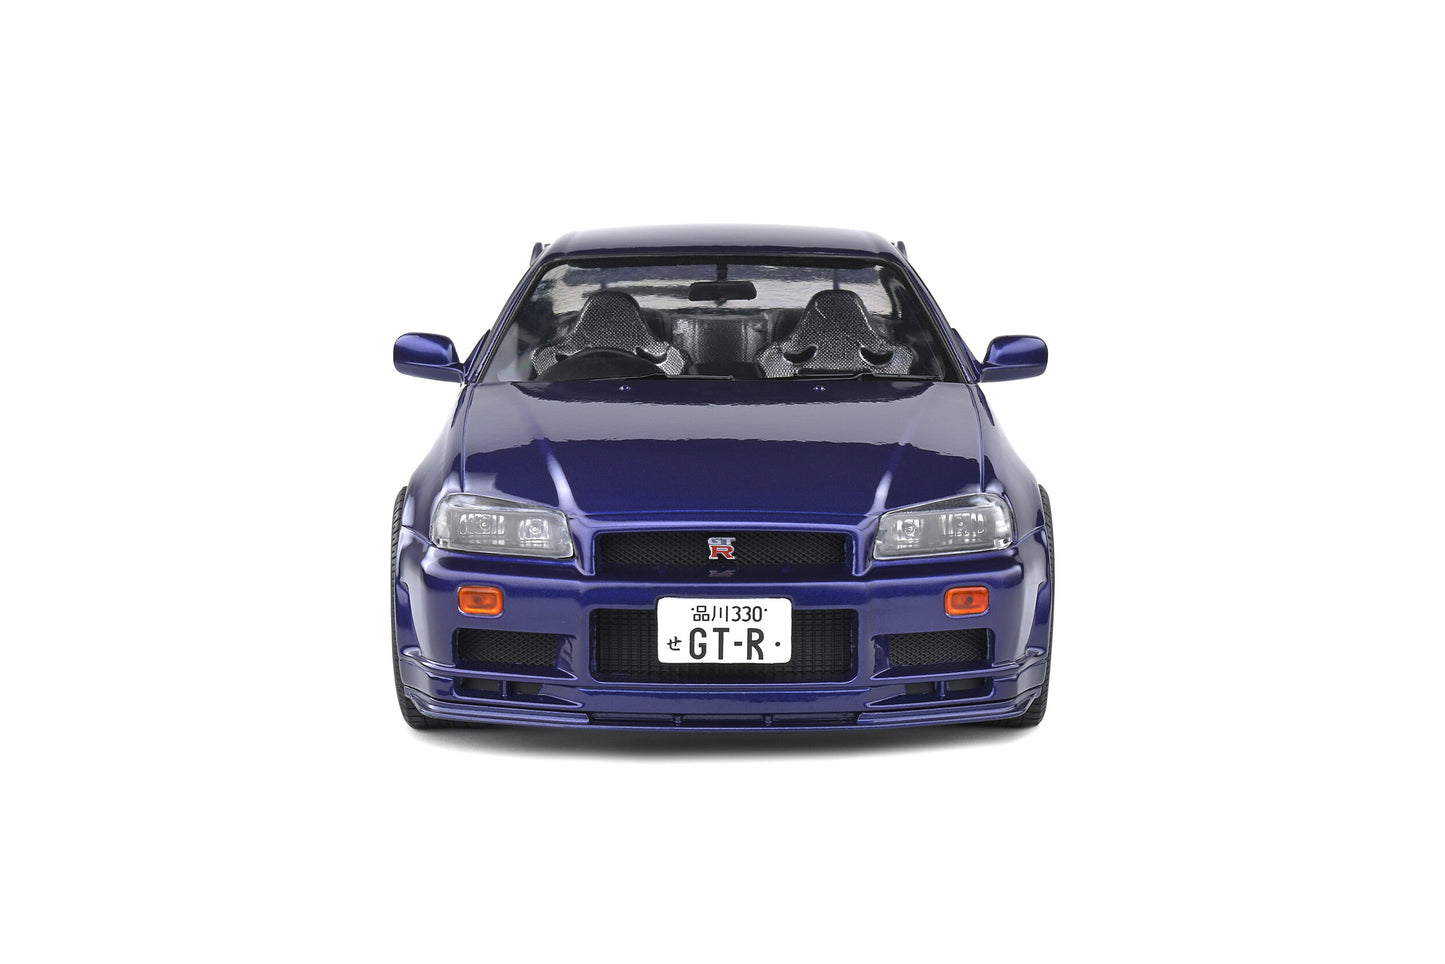 Solido - Nissan Skyline GT-R (R34) (Midnight Purple) 1:18 Scale Model Car